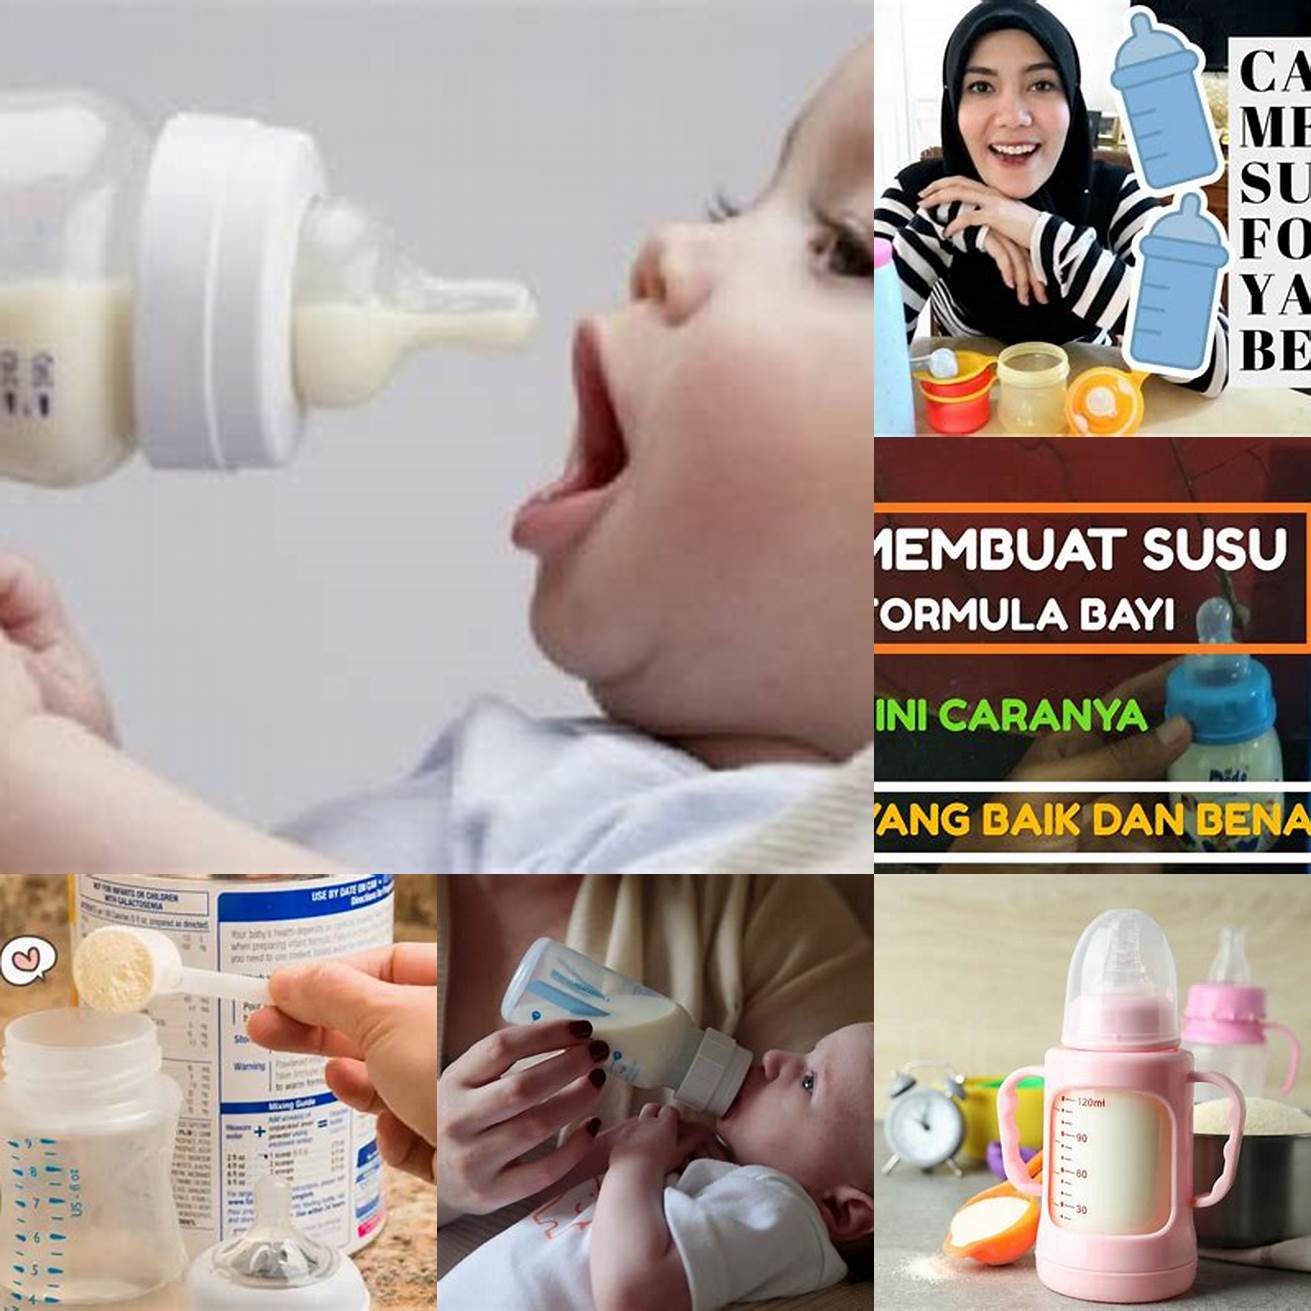 8 Jangan Memberikan Susu Formula yang Berlebihan